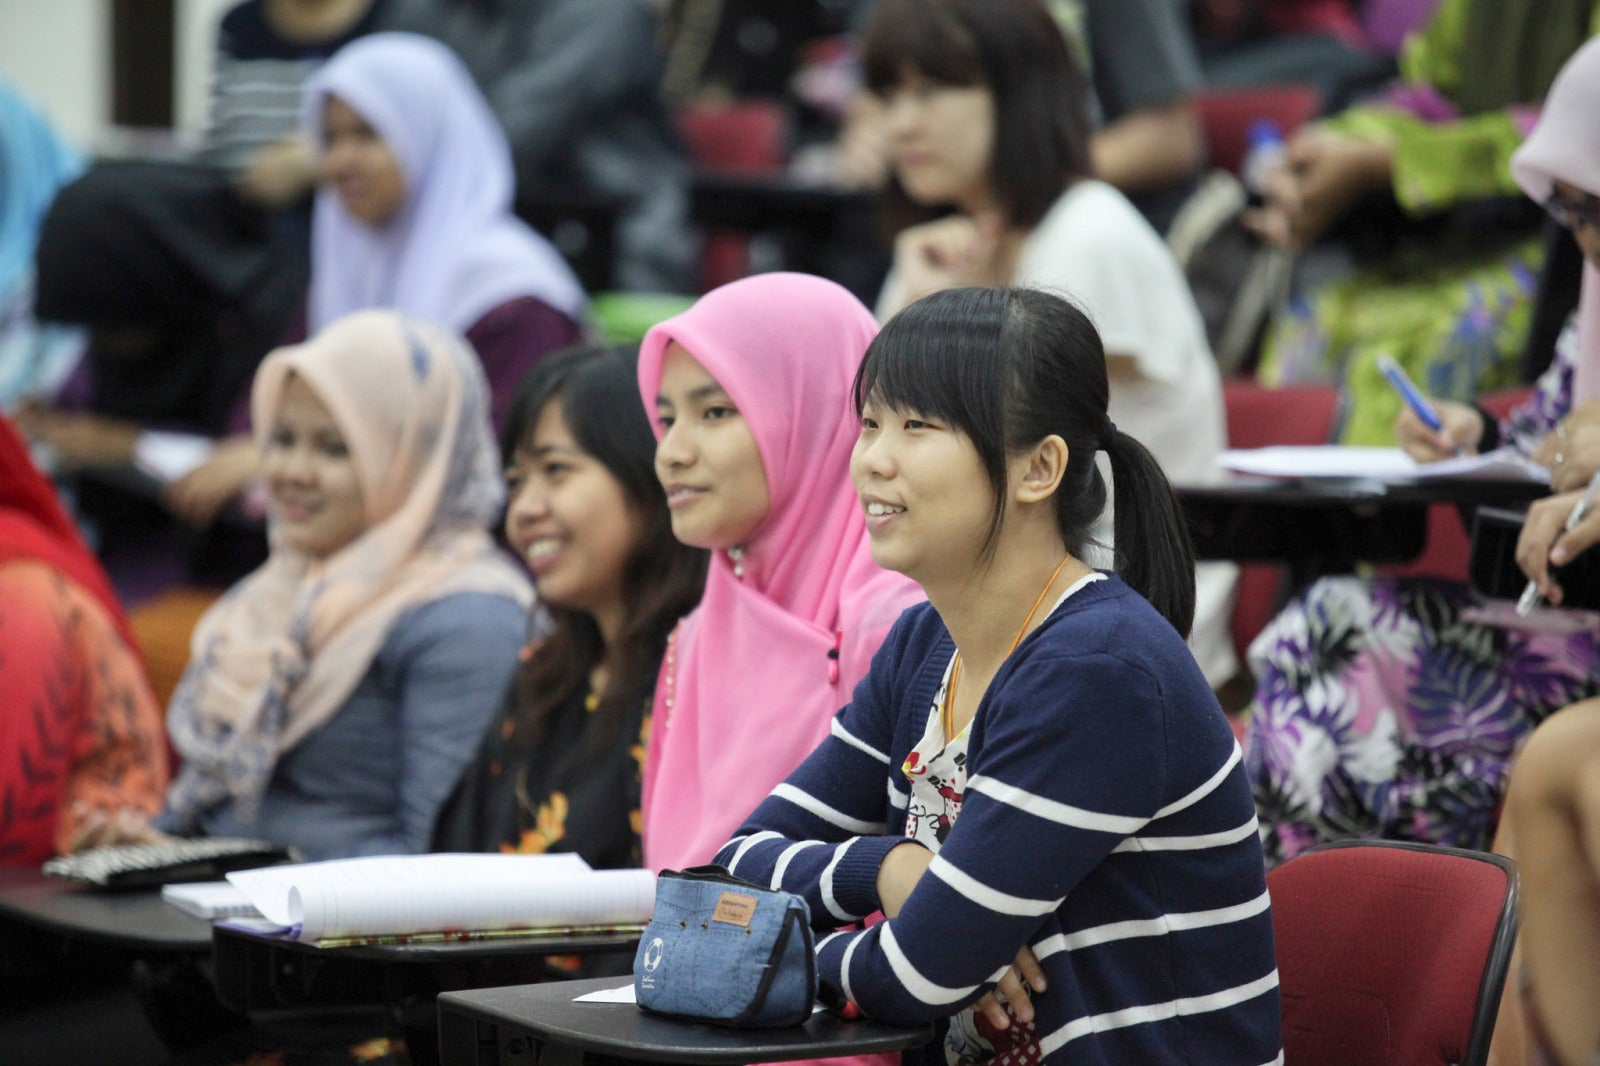 Malaysian students flickr